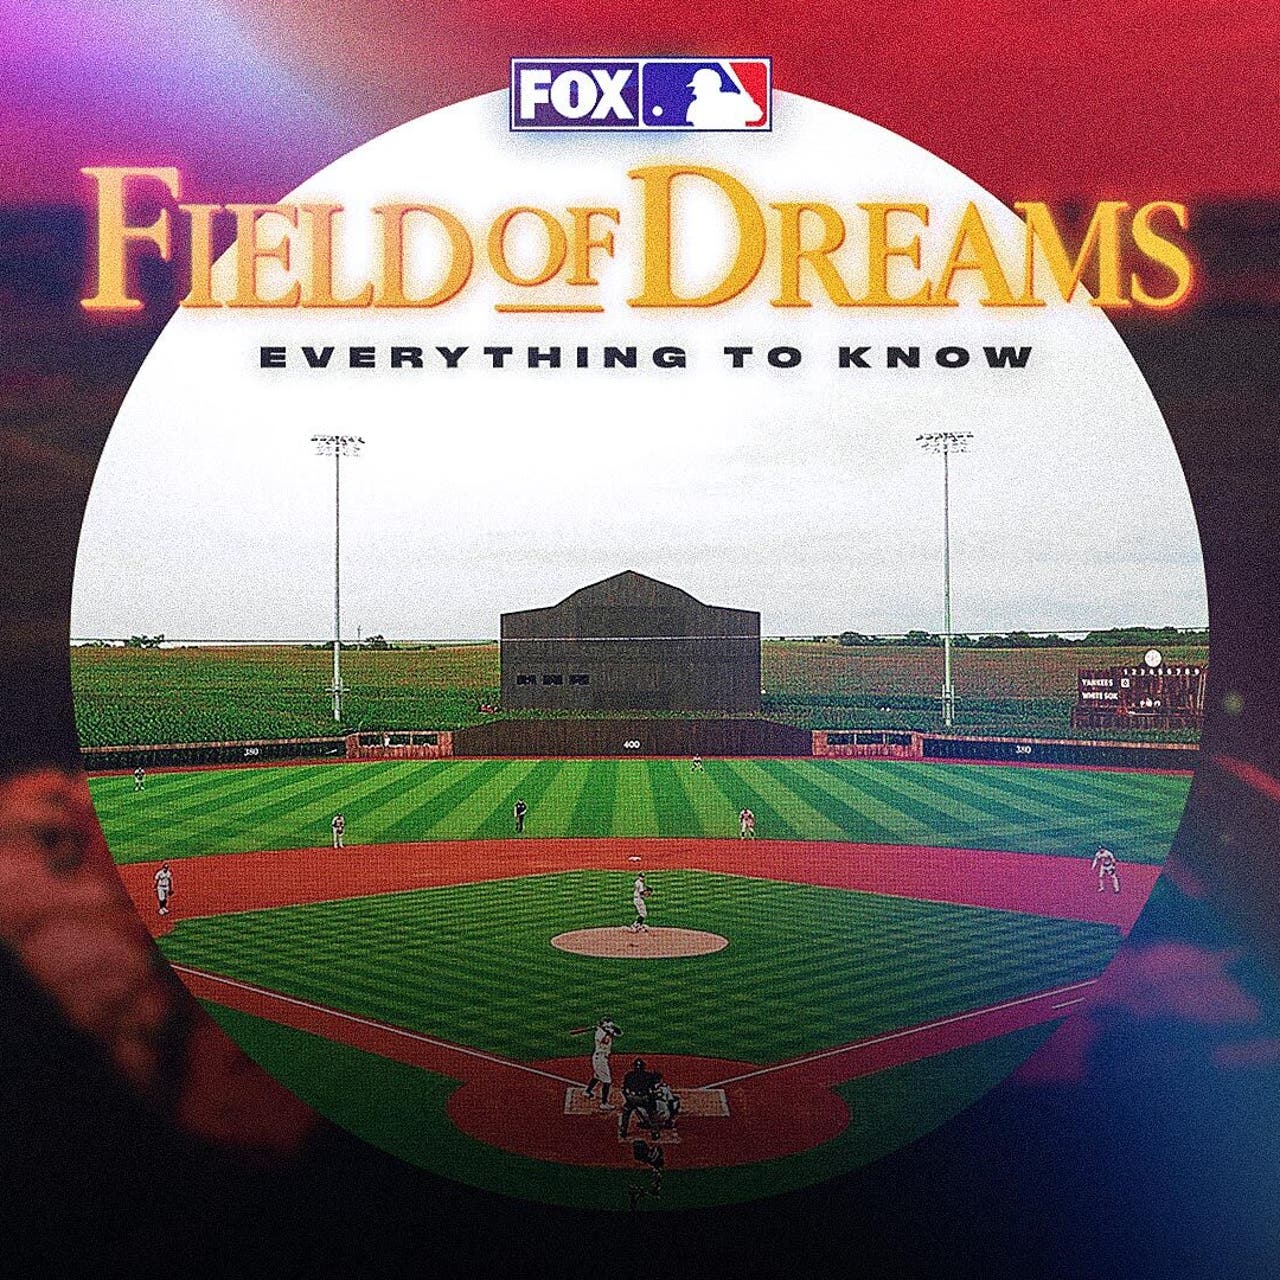 2022 Field of Dreams festivities start today - Ballpark Digest